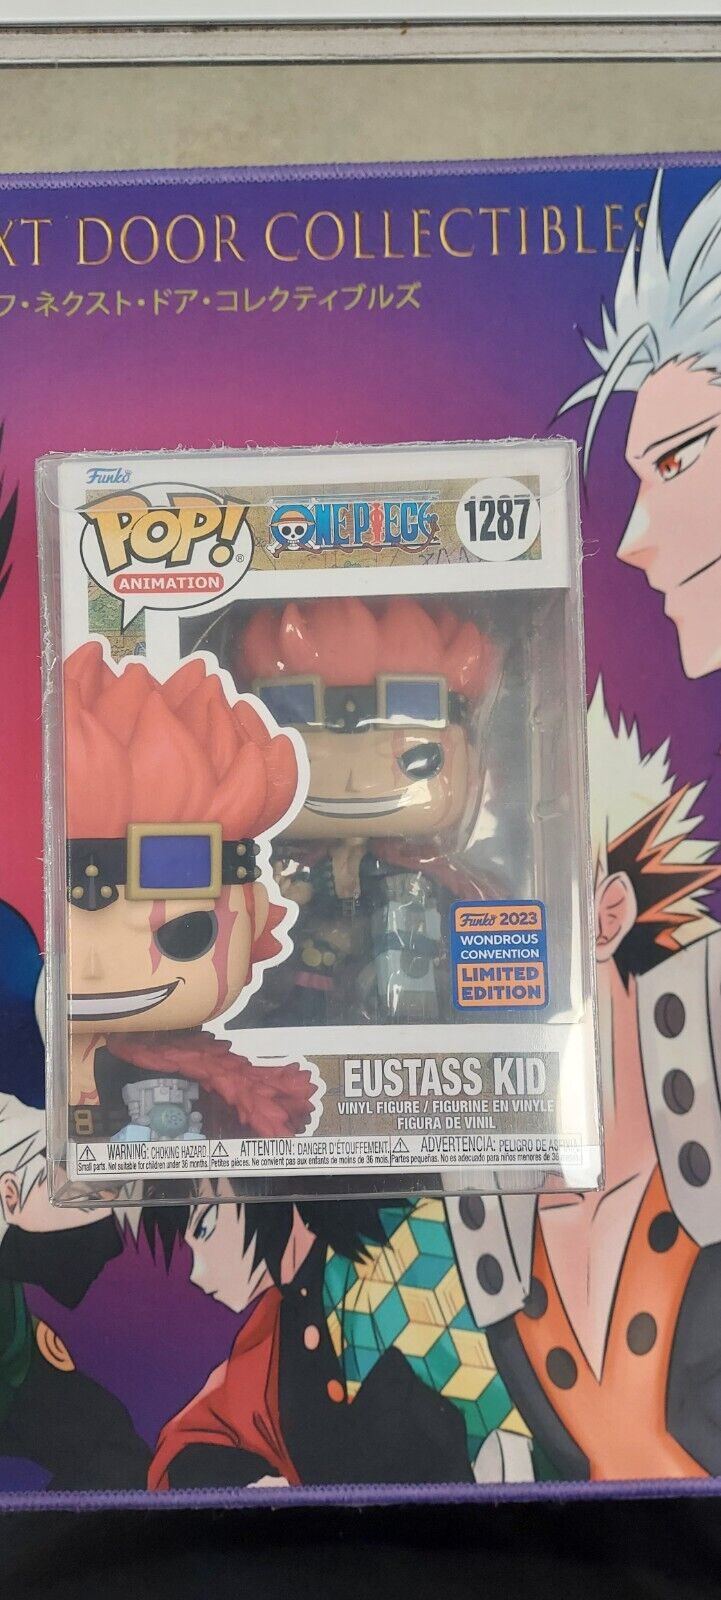 Funko Pop One Piece Eustass Kid #1287 Wondrous Convention 2023 with Protector